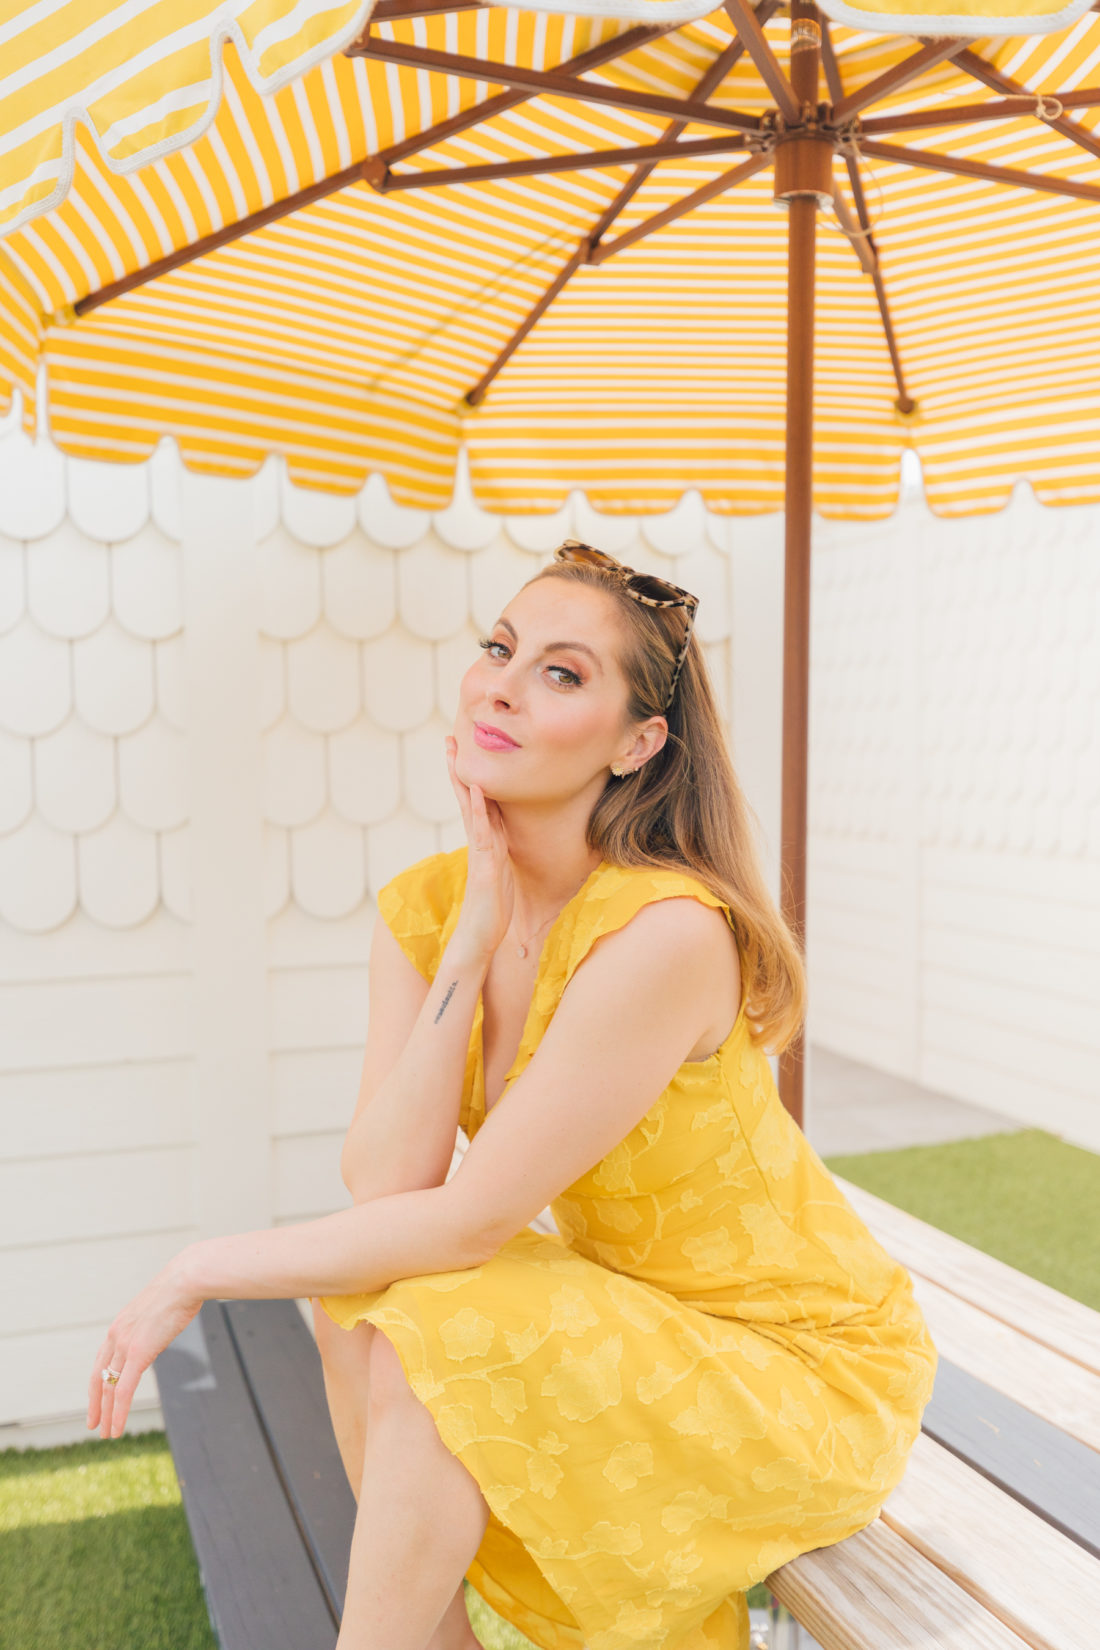 Eva Amurri Martino wears a bright yellow dress next to a yellow striped umbrella